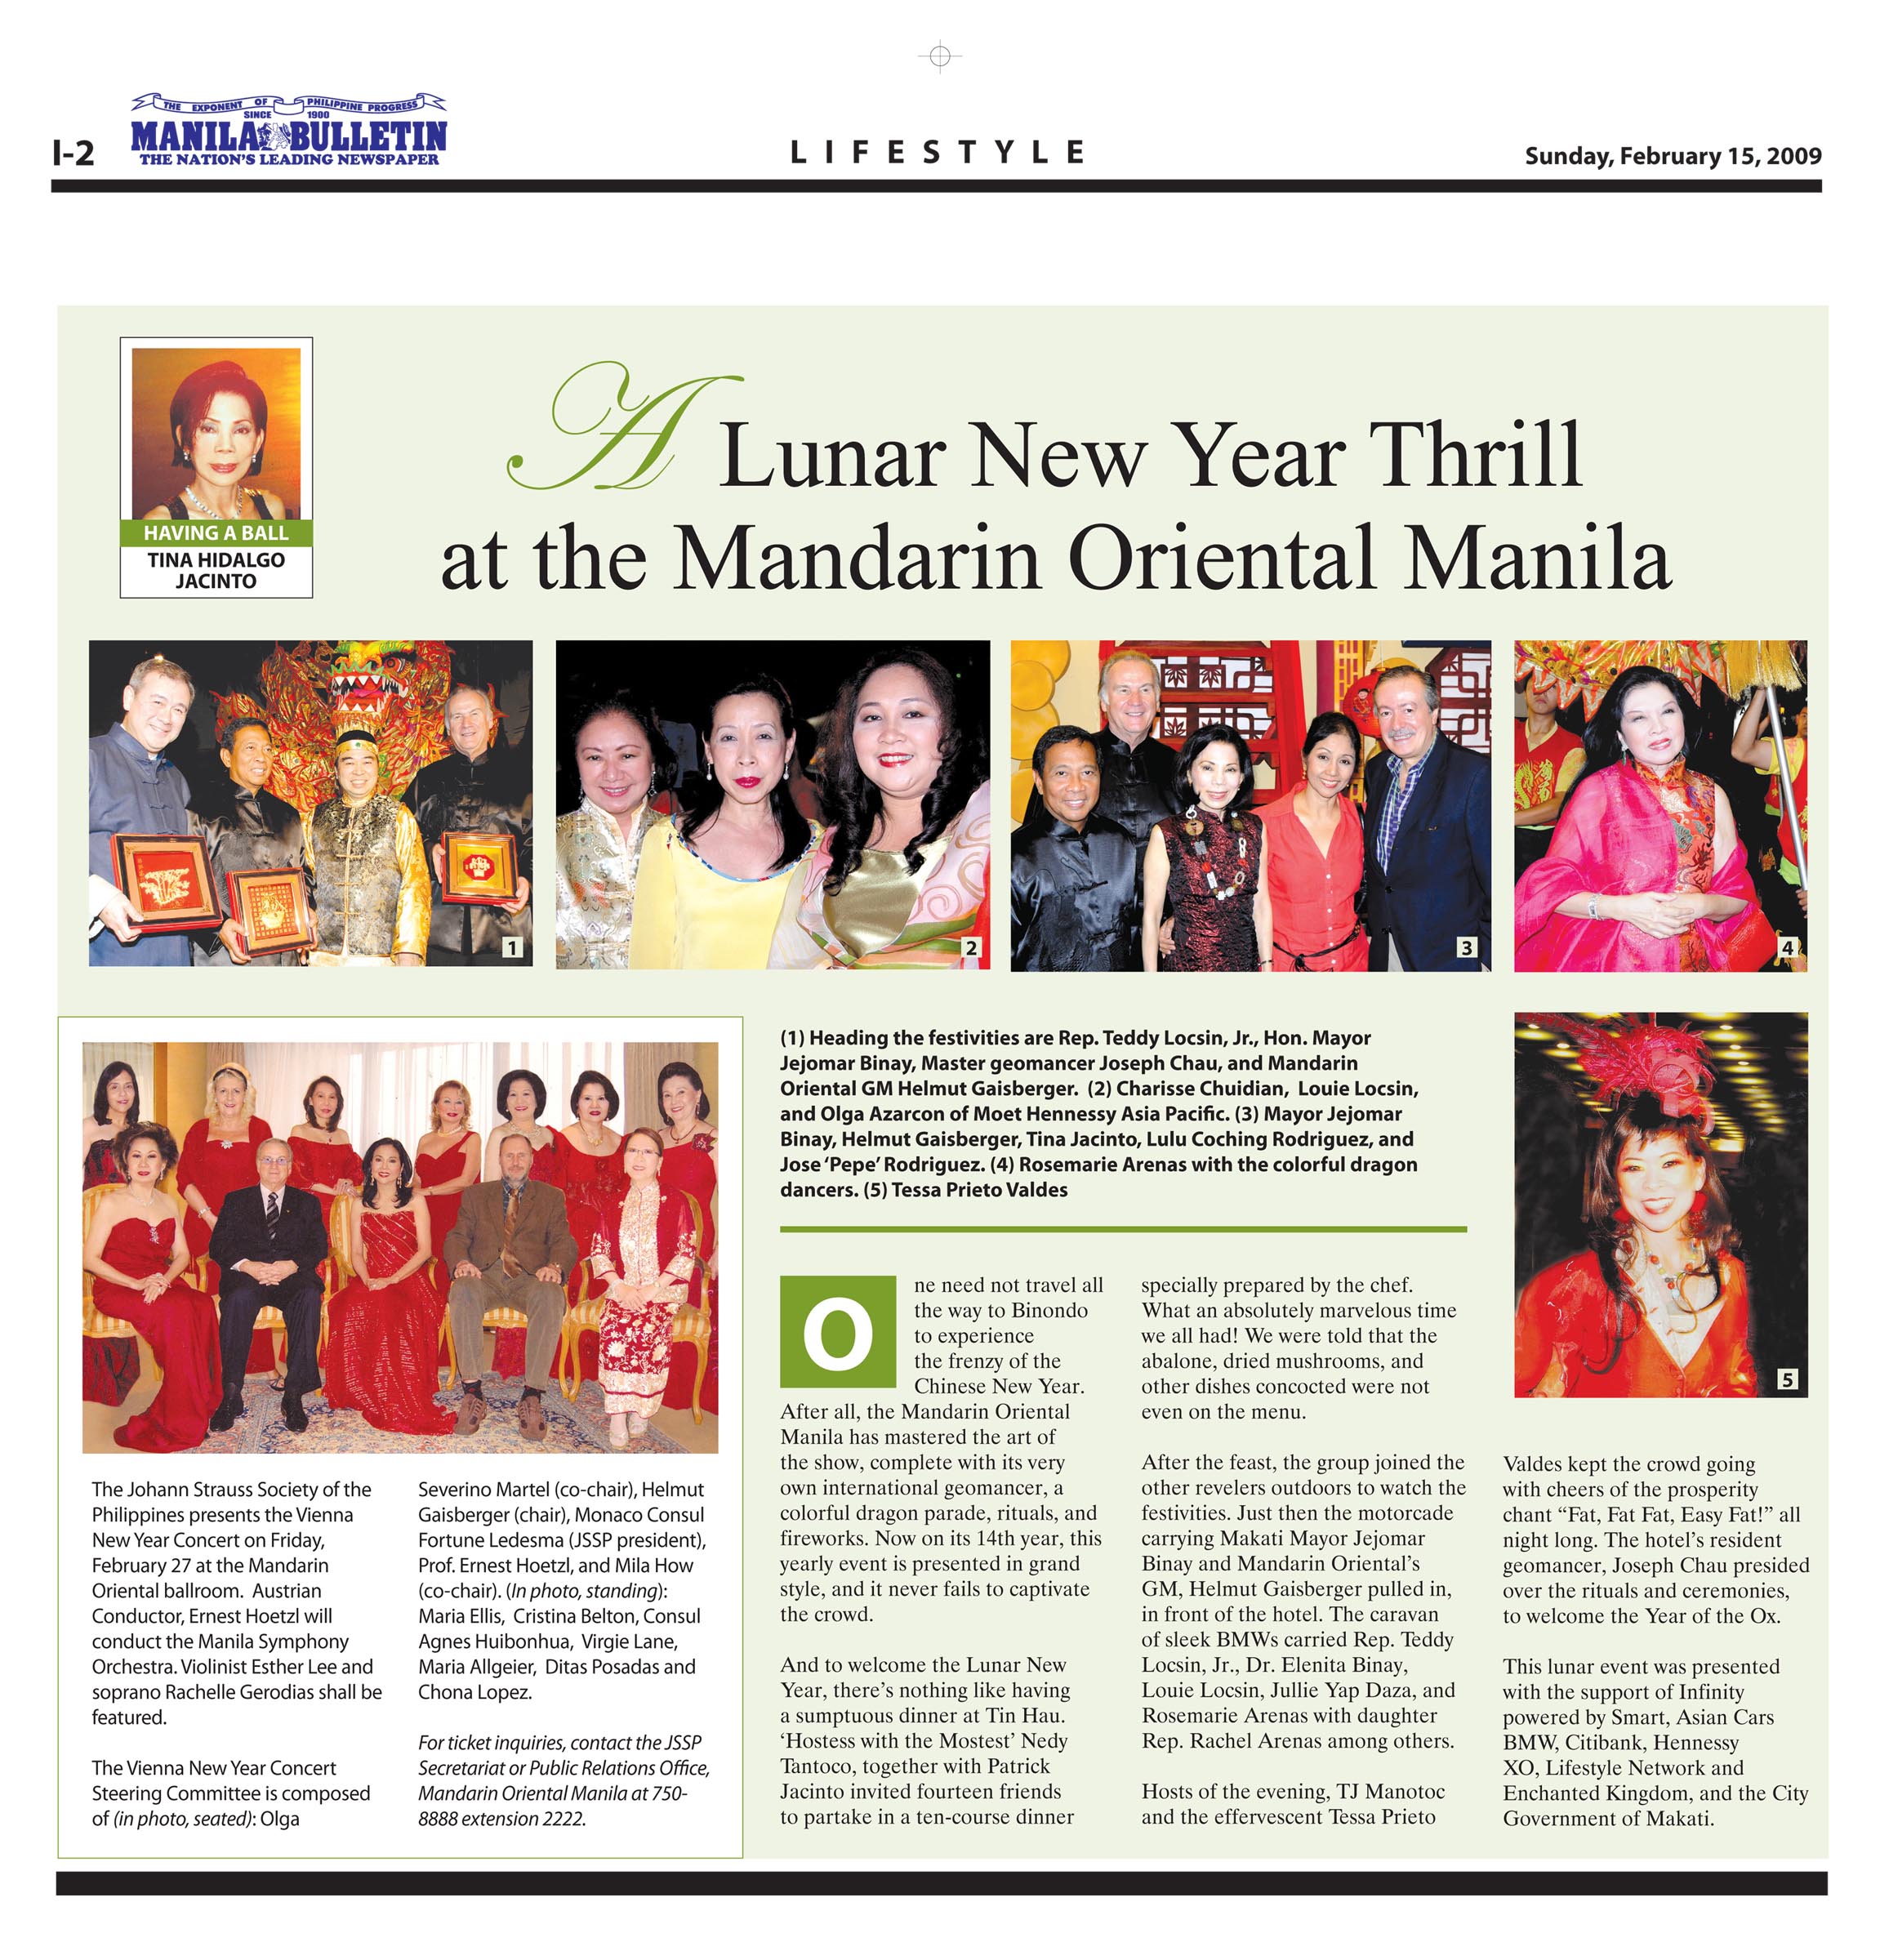 A Lunar New Year Thrill at the Mandarin Oriental Manila